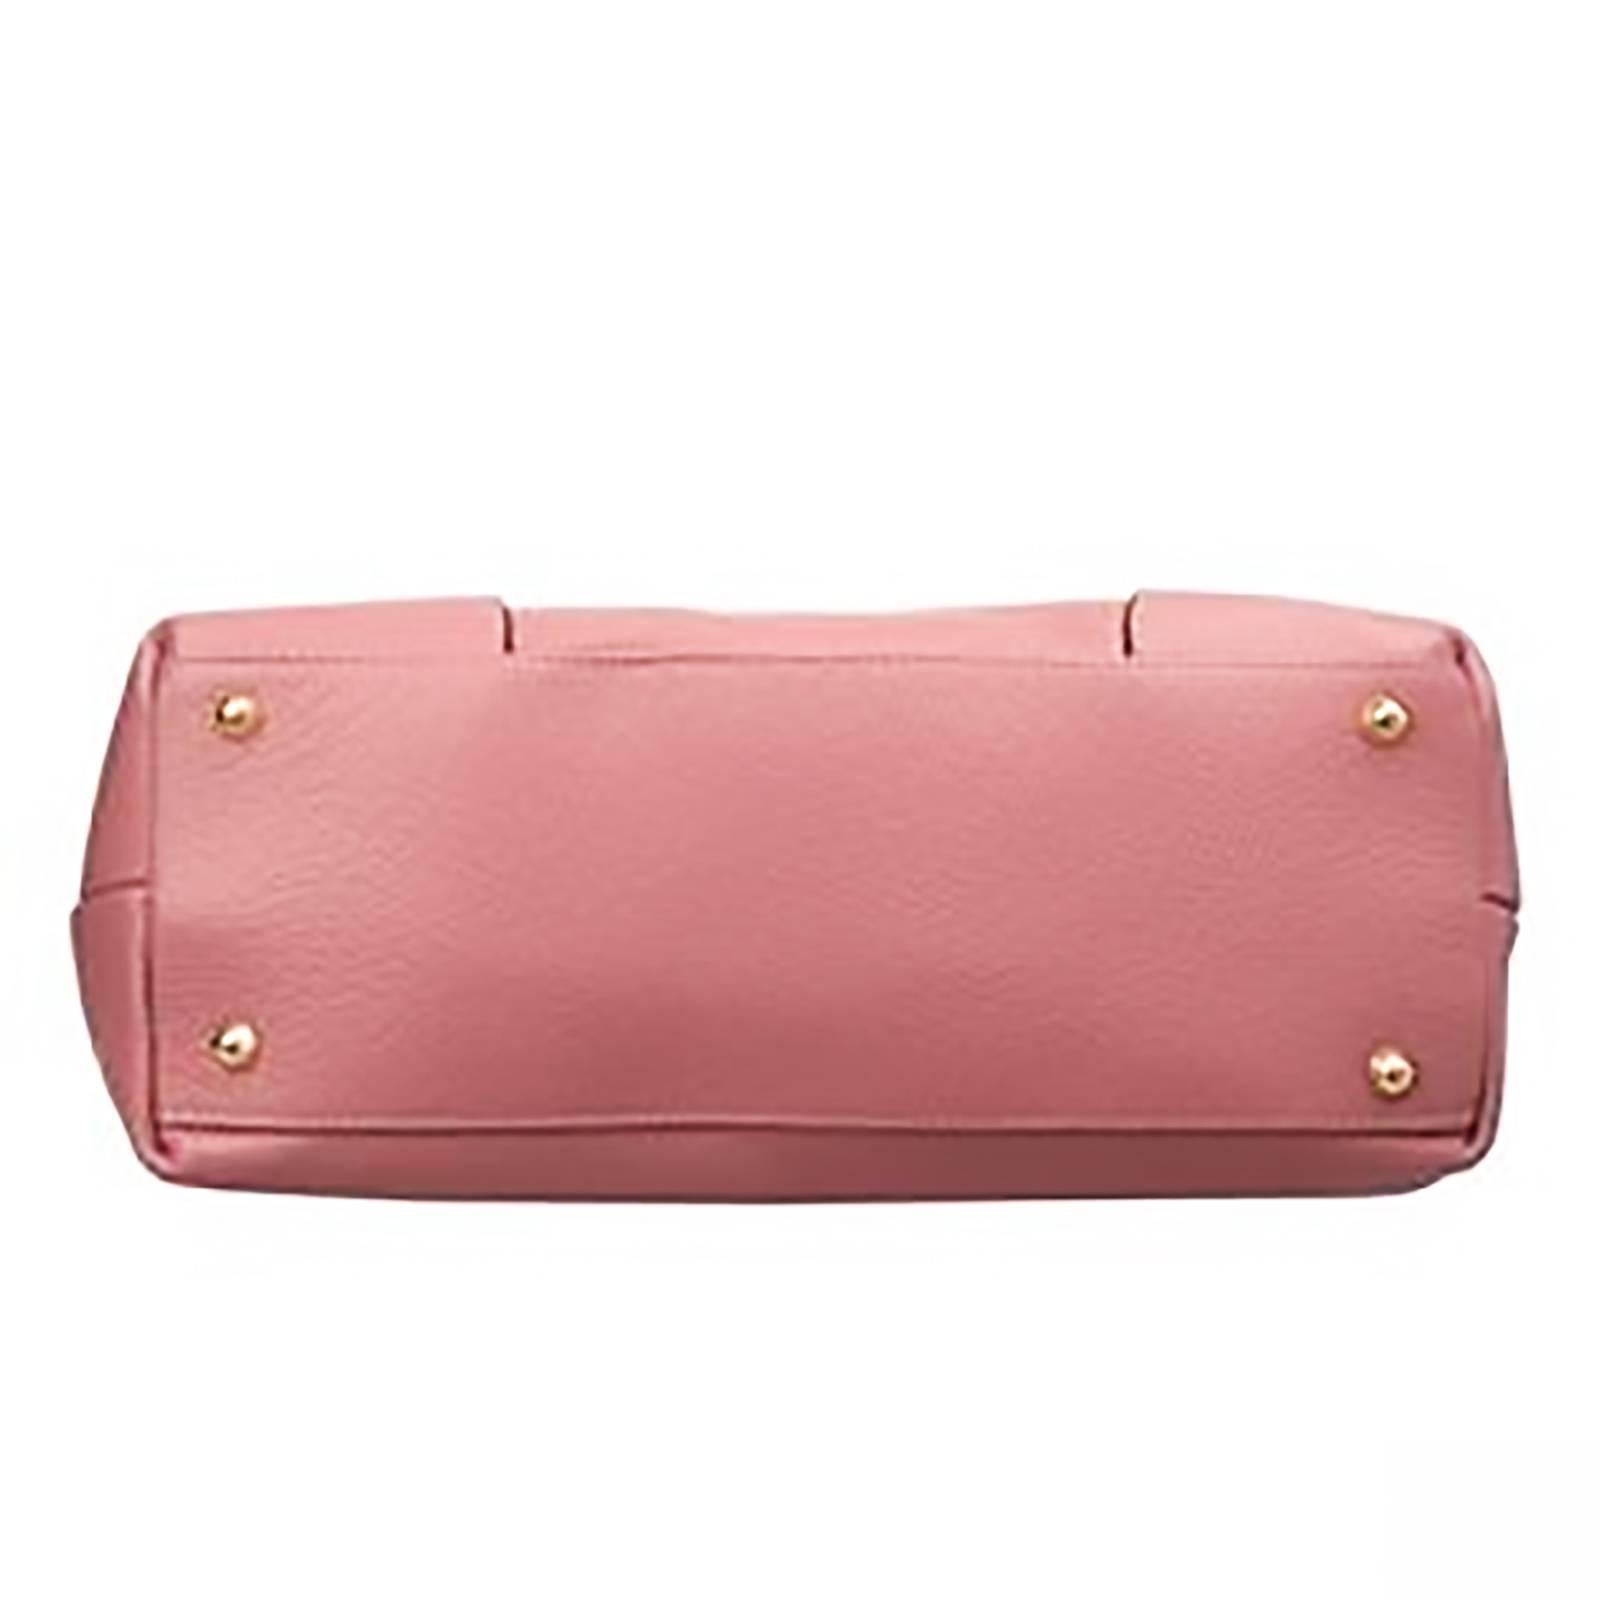 Women's Pierre Cardin New rose pink leather hobo bag handbag